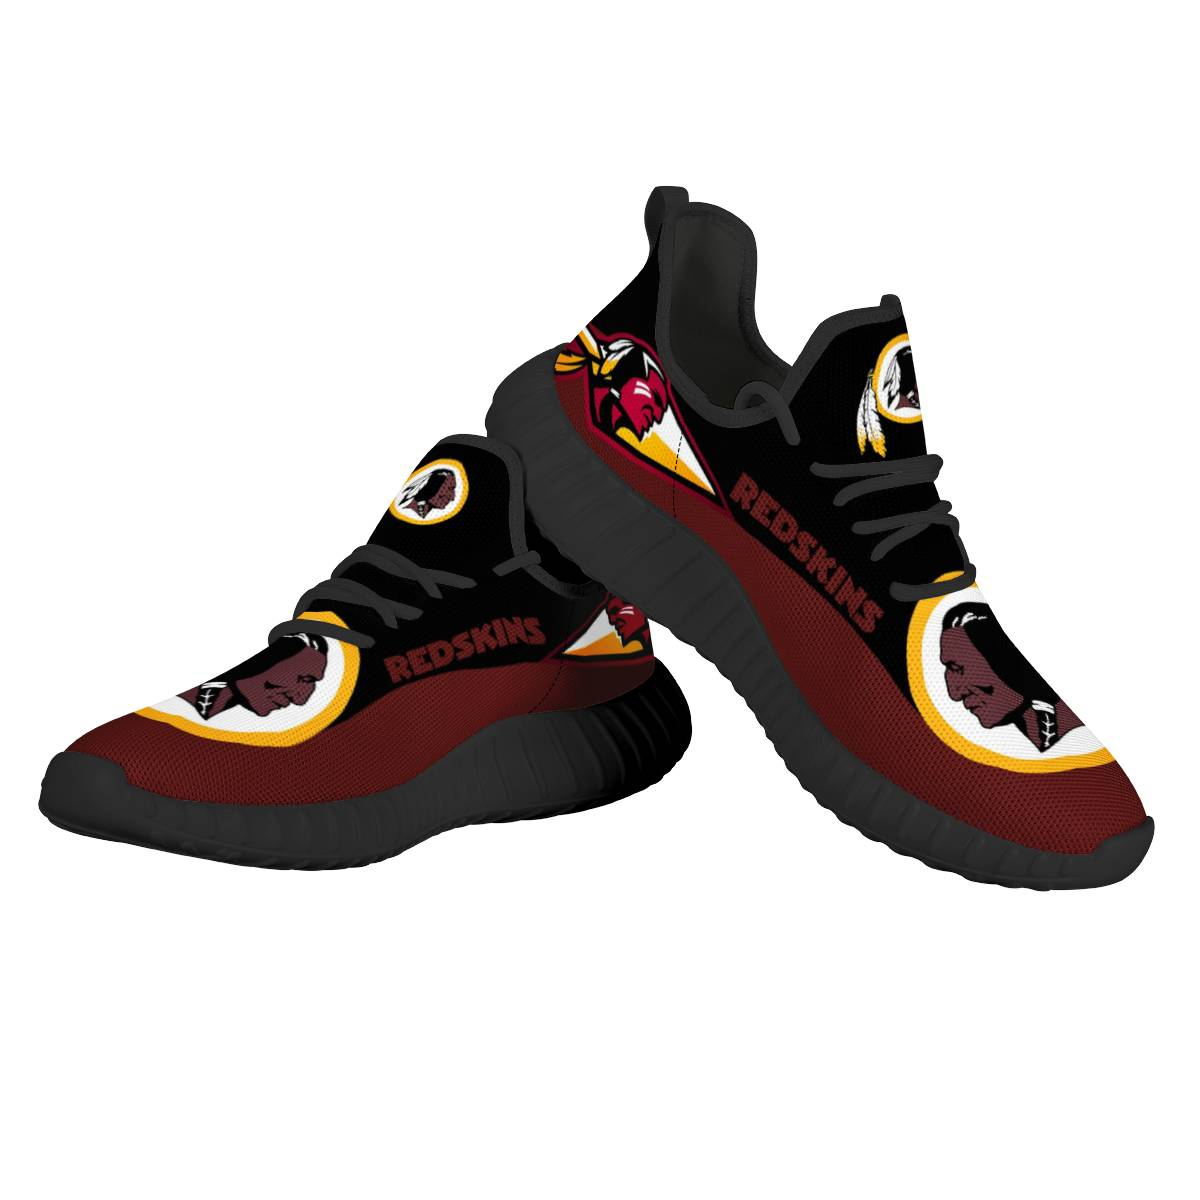 Men's NFL Washington Redskins Mesh Knit Sneakers/Shoes 002